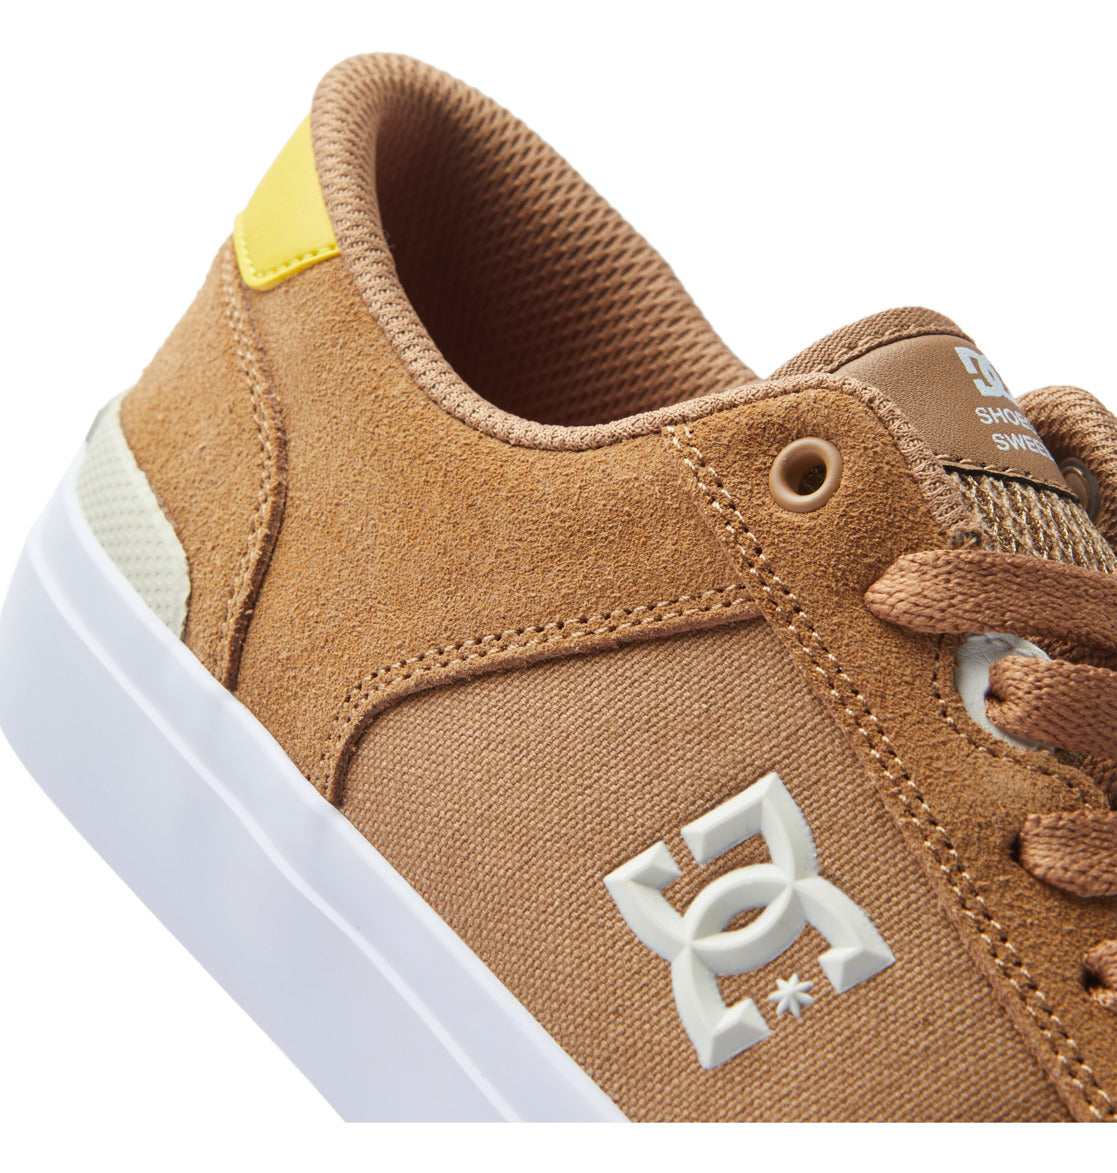 Zapatilla de skate Dc Shoes Teknic S - Brown/Yellow | Calzado | Zapatillas | surfdevils.com